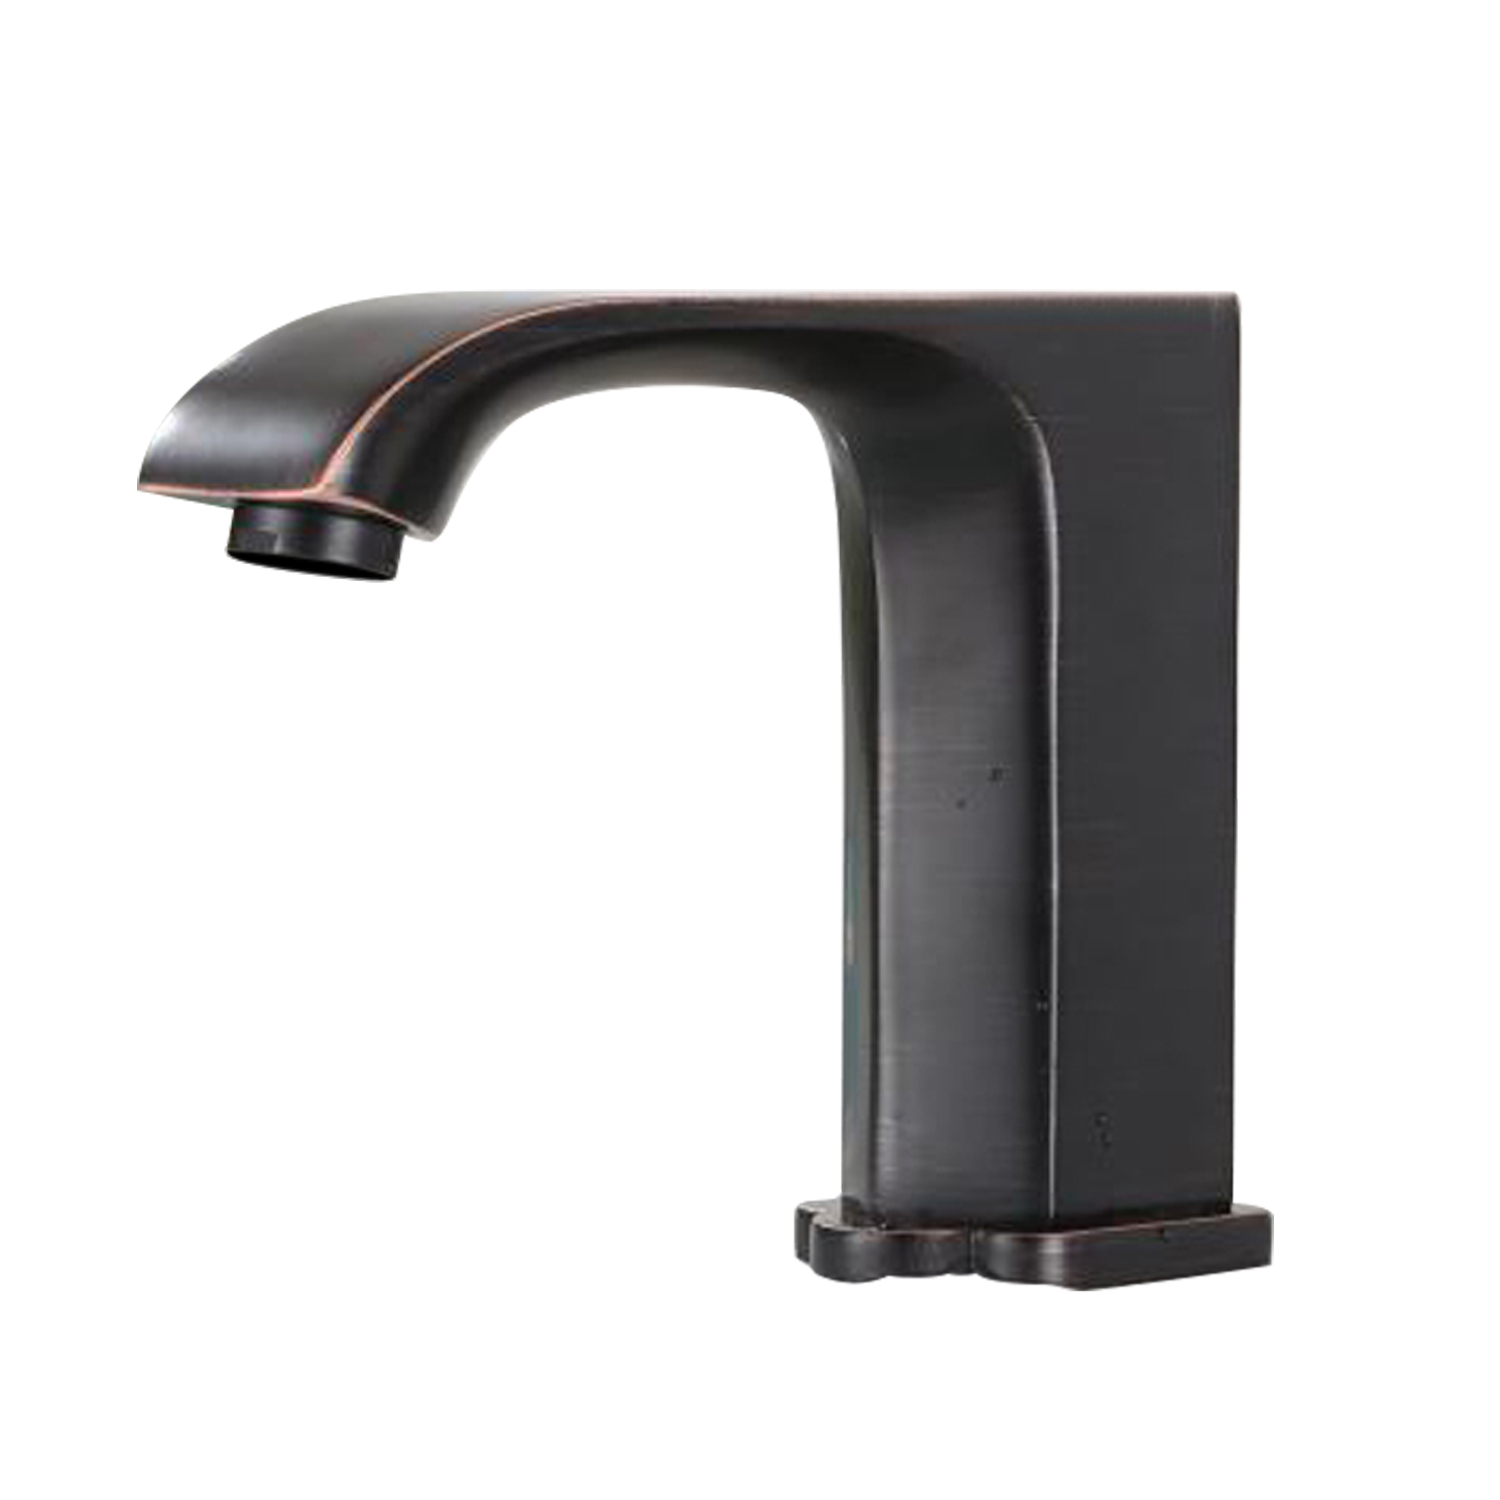 Fontana-Black-Oil-Rubbed-Bronze-Automatic-Sensor